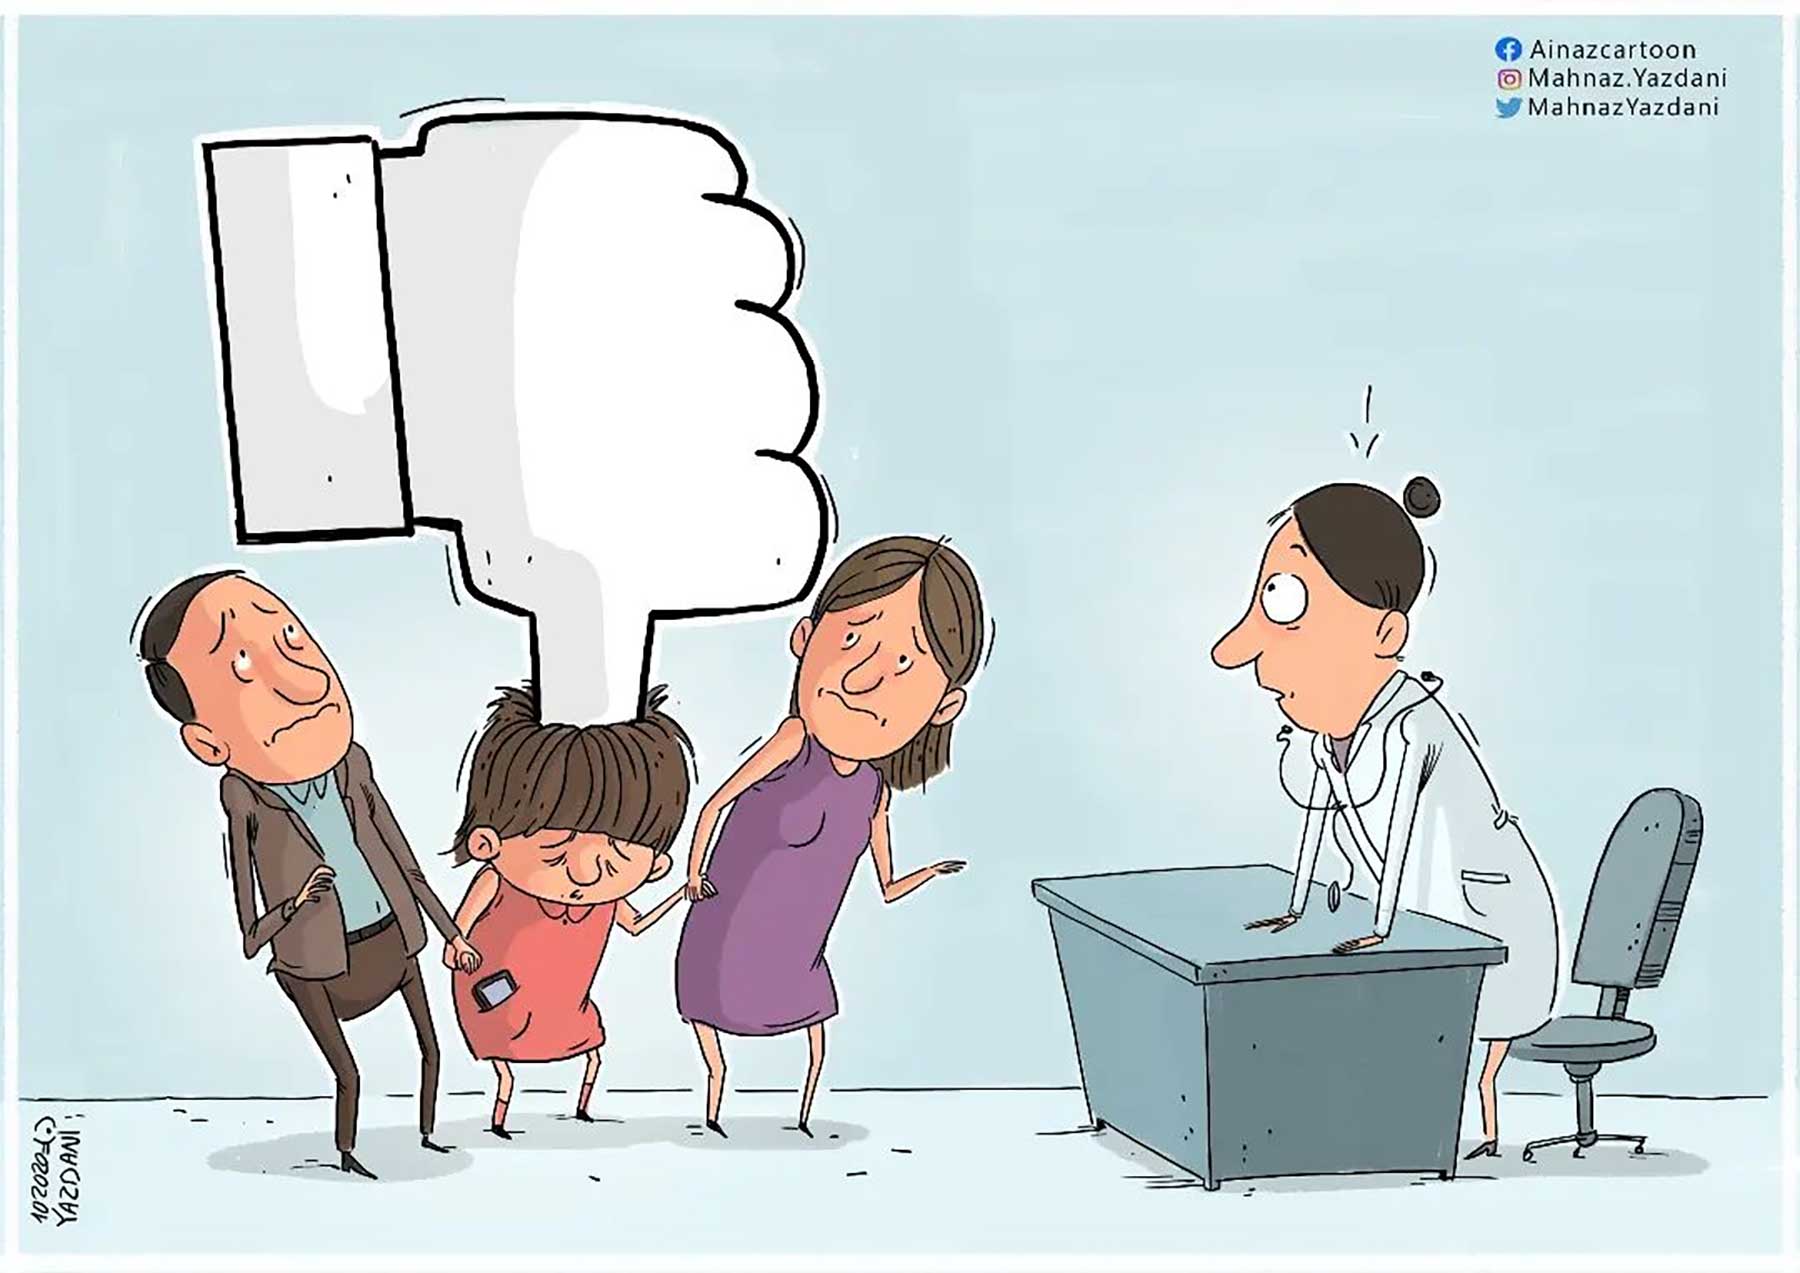 Gesellschaftskritische Karikaturen von Mahnaz Yazdani Mahnaz-Yazdani-karitkaturen 